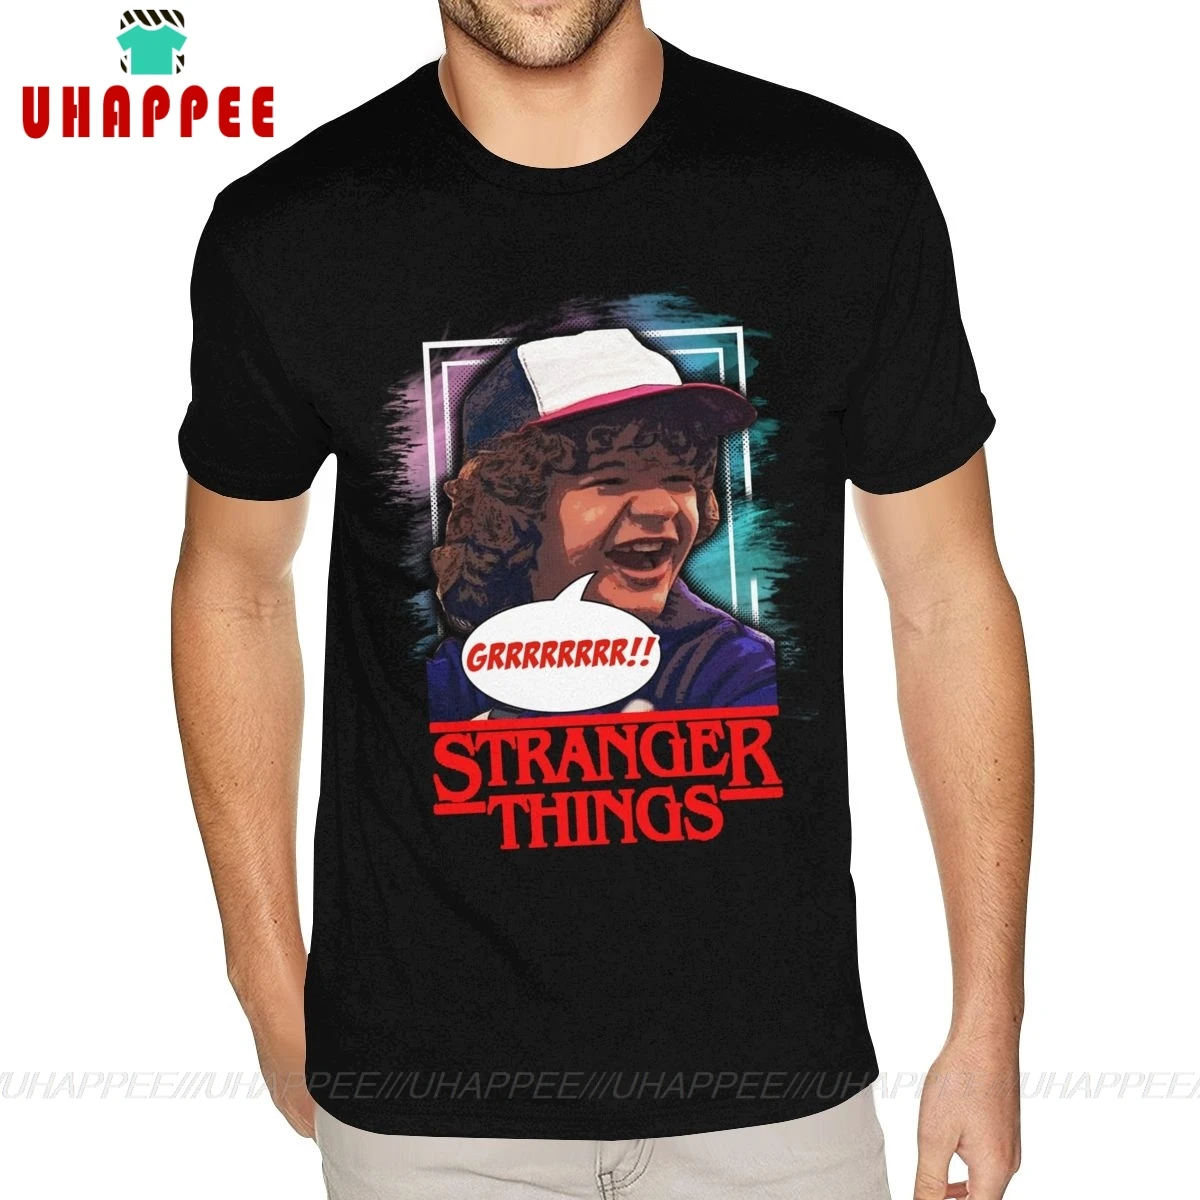 Dustin Stranger Things Funny Fashionable T Shirts Big Size Boyfriend's Screen Printed Tees